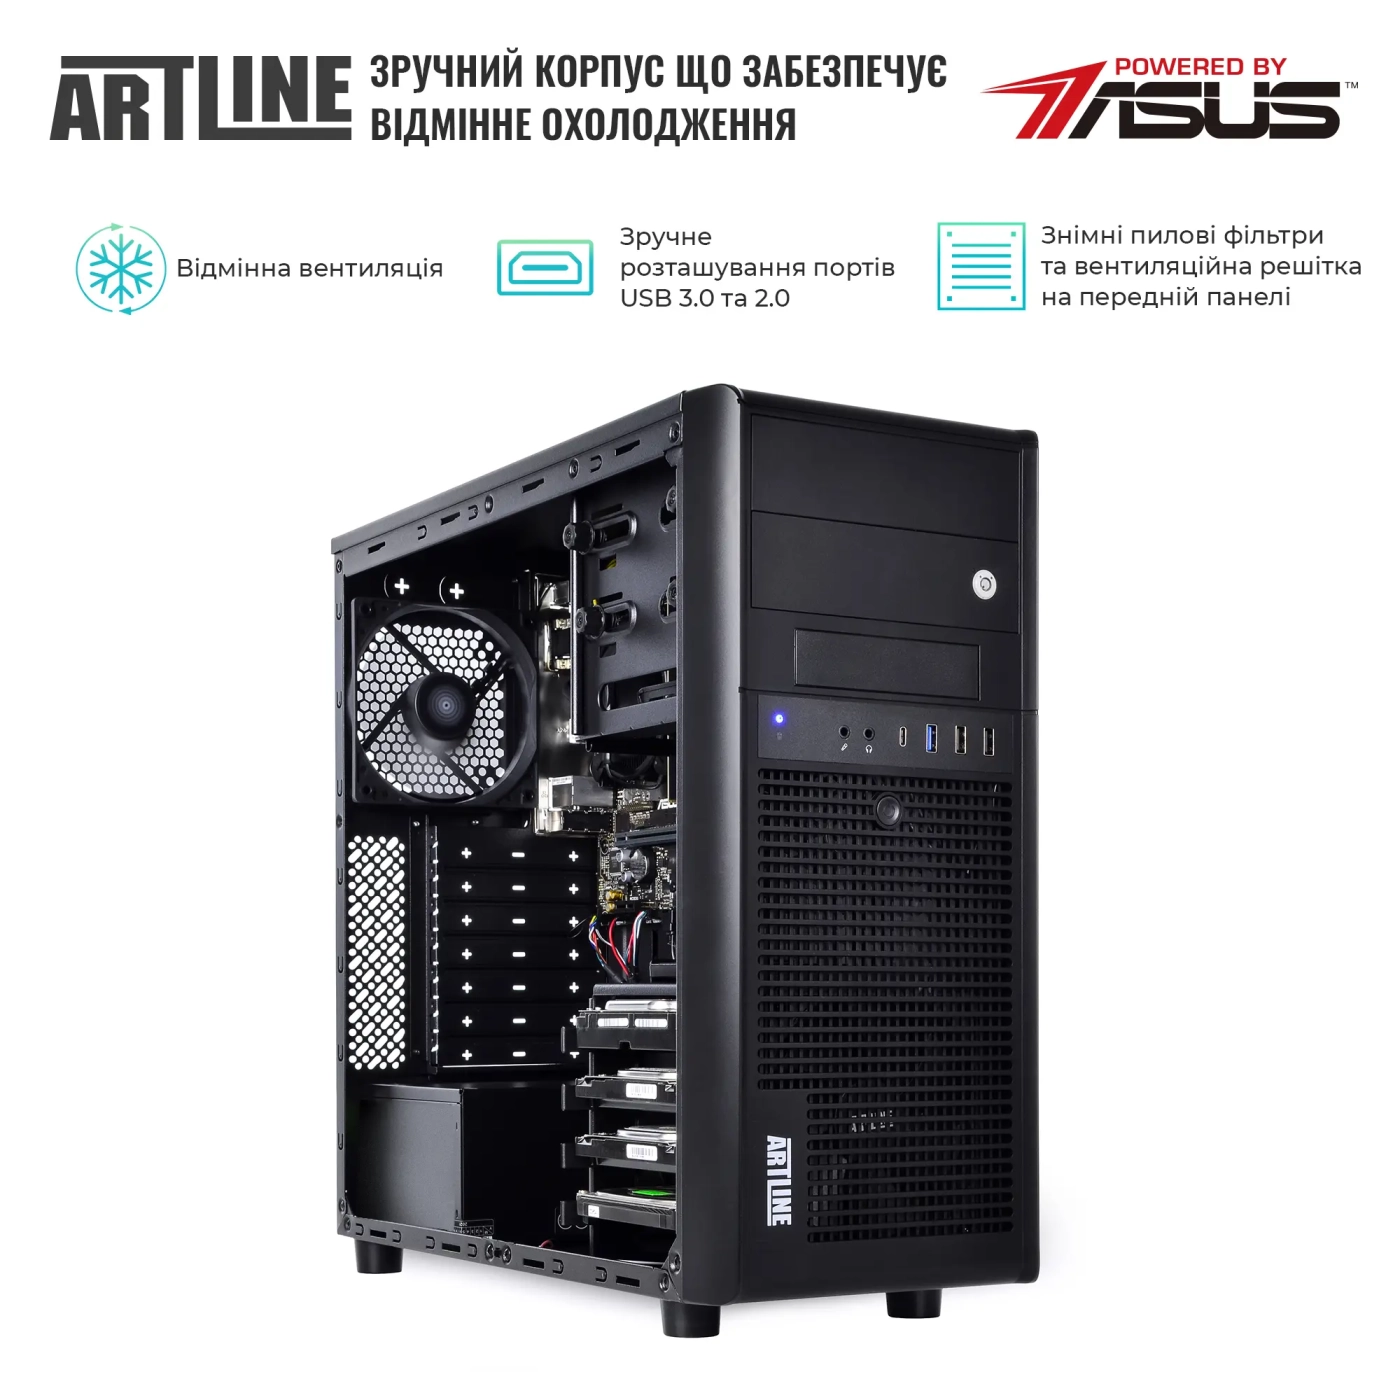 Купити Сервер ARTLINE Business T37v16 - фото 3